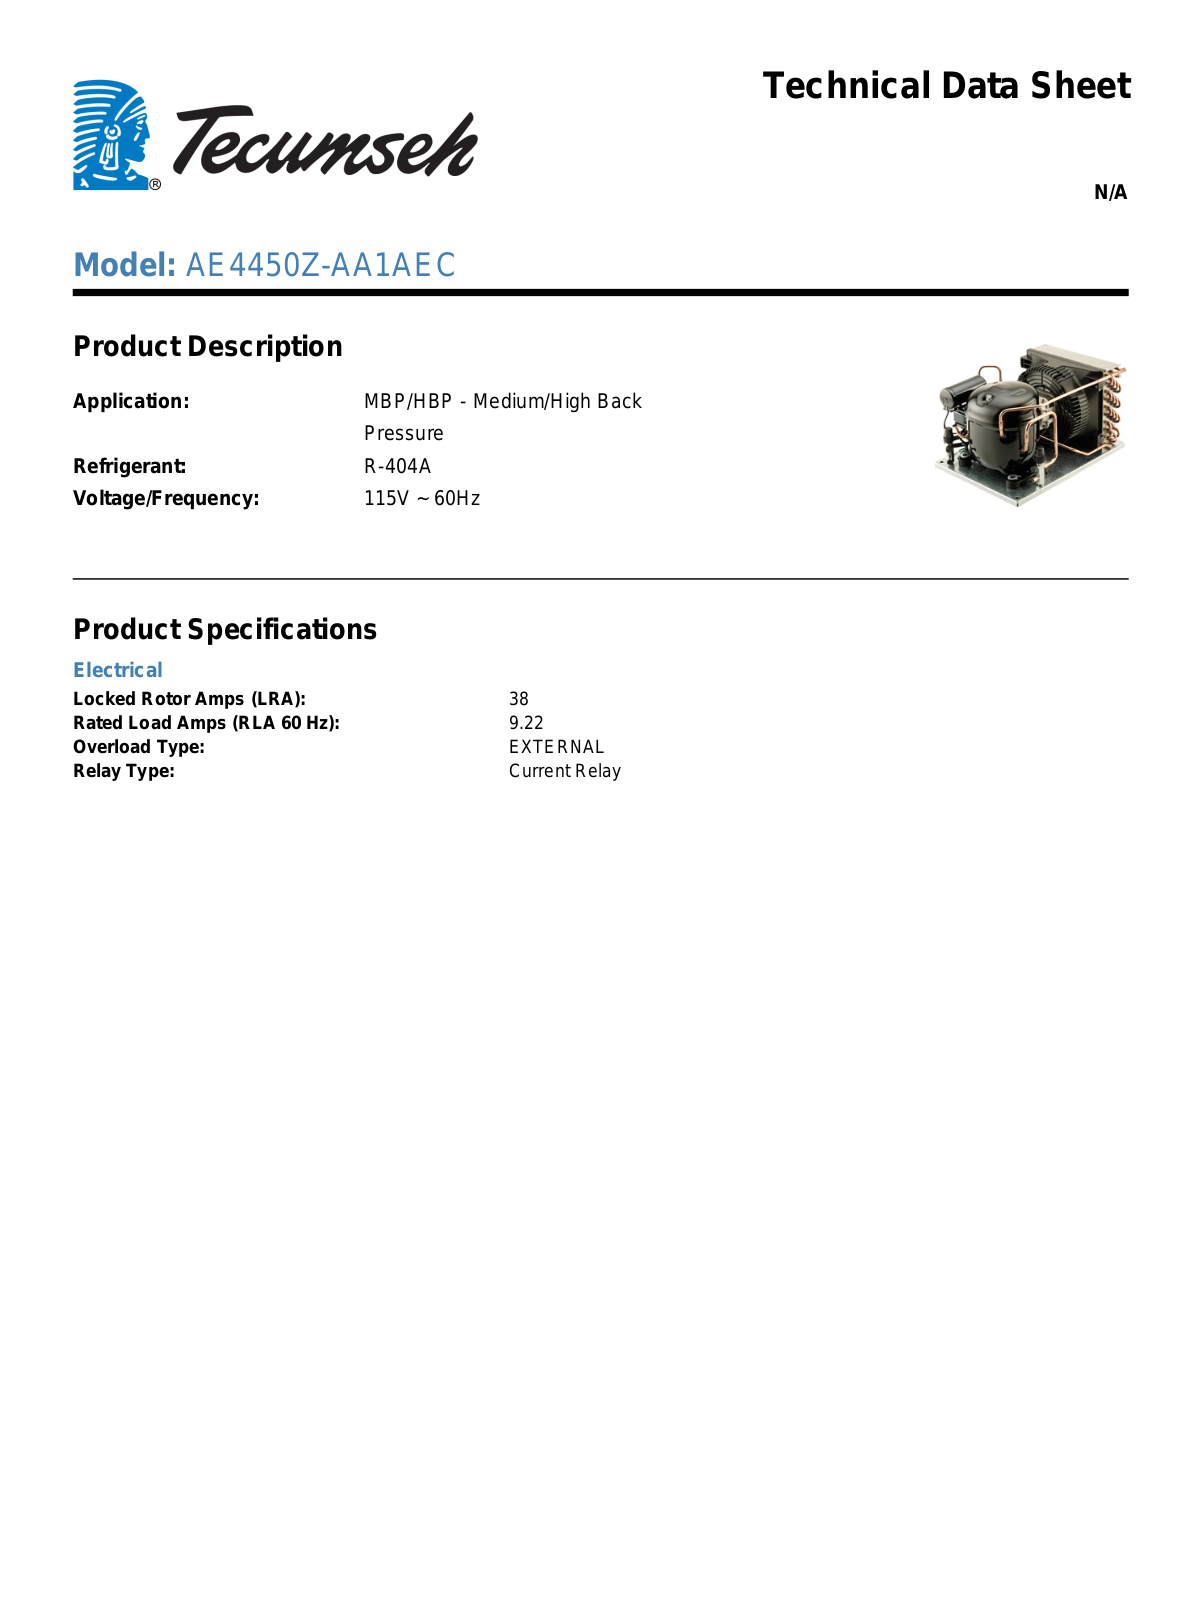 Tecumseh AE4450Z-AA1AEC Technical Data Sheet